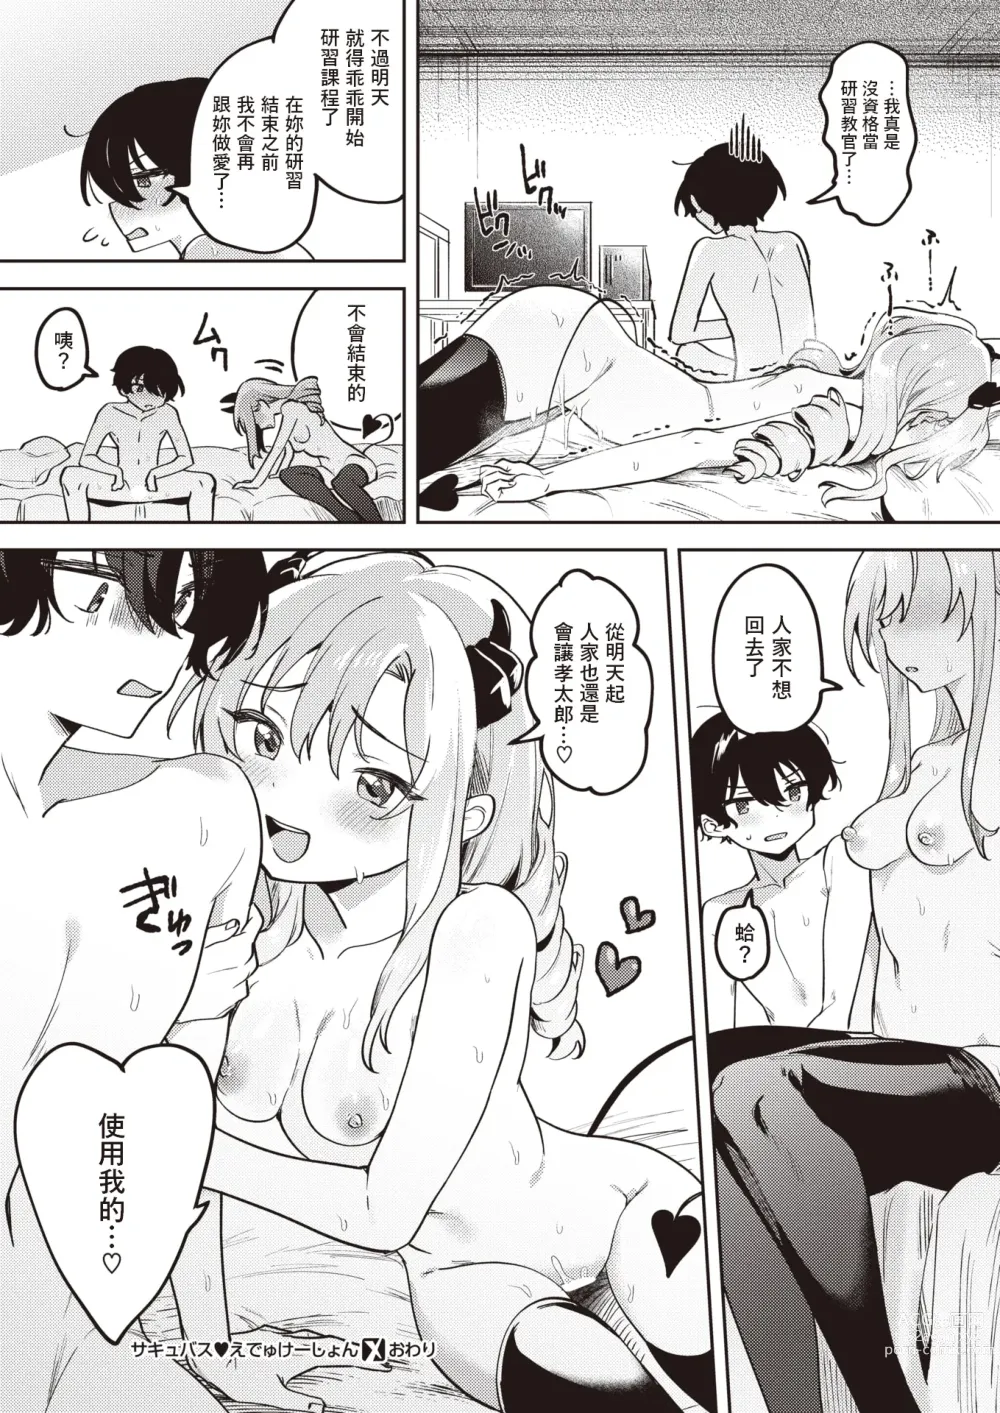 Page 29 of manga Succubus ♥ Education